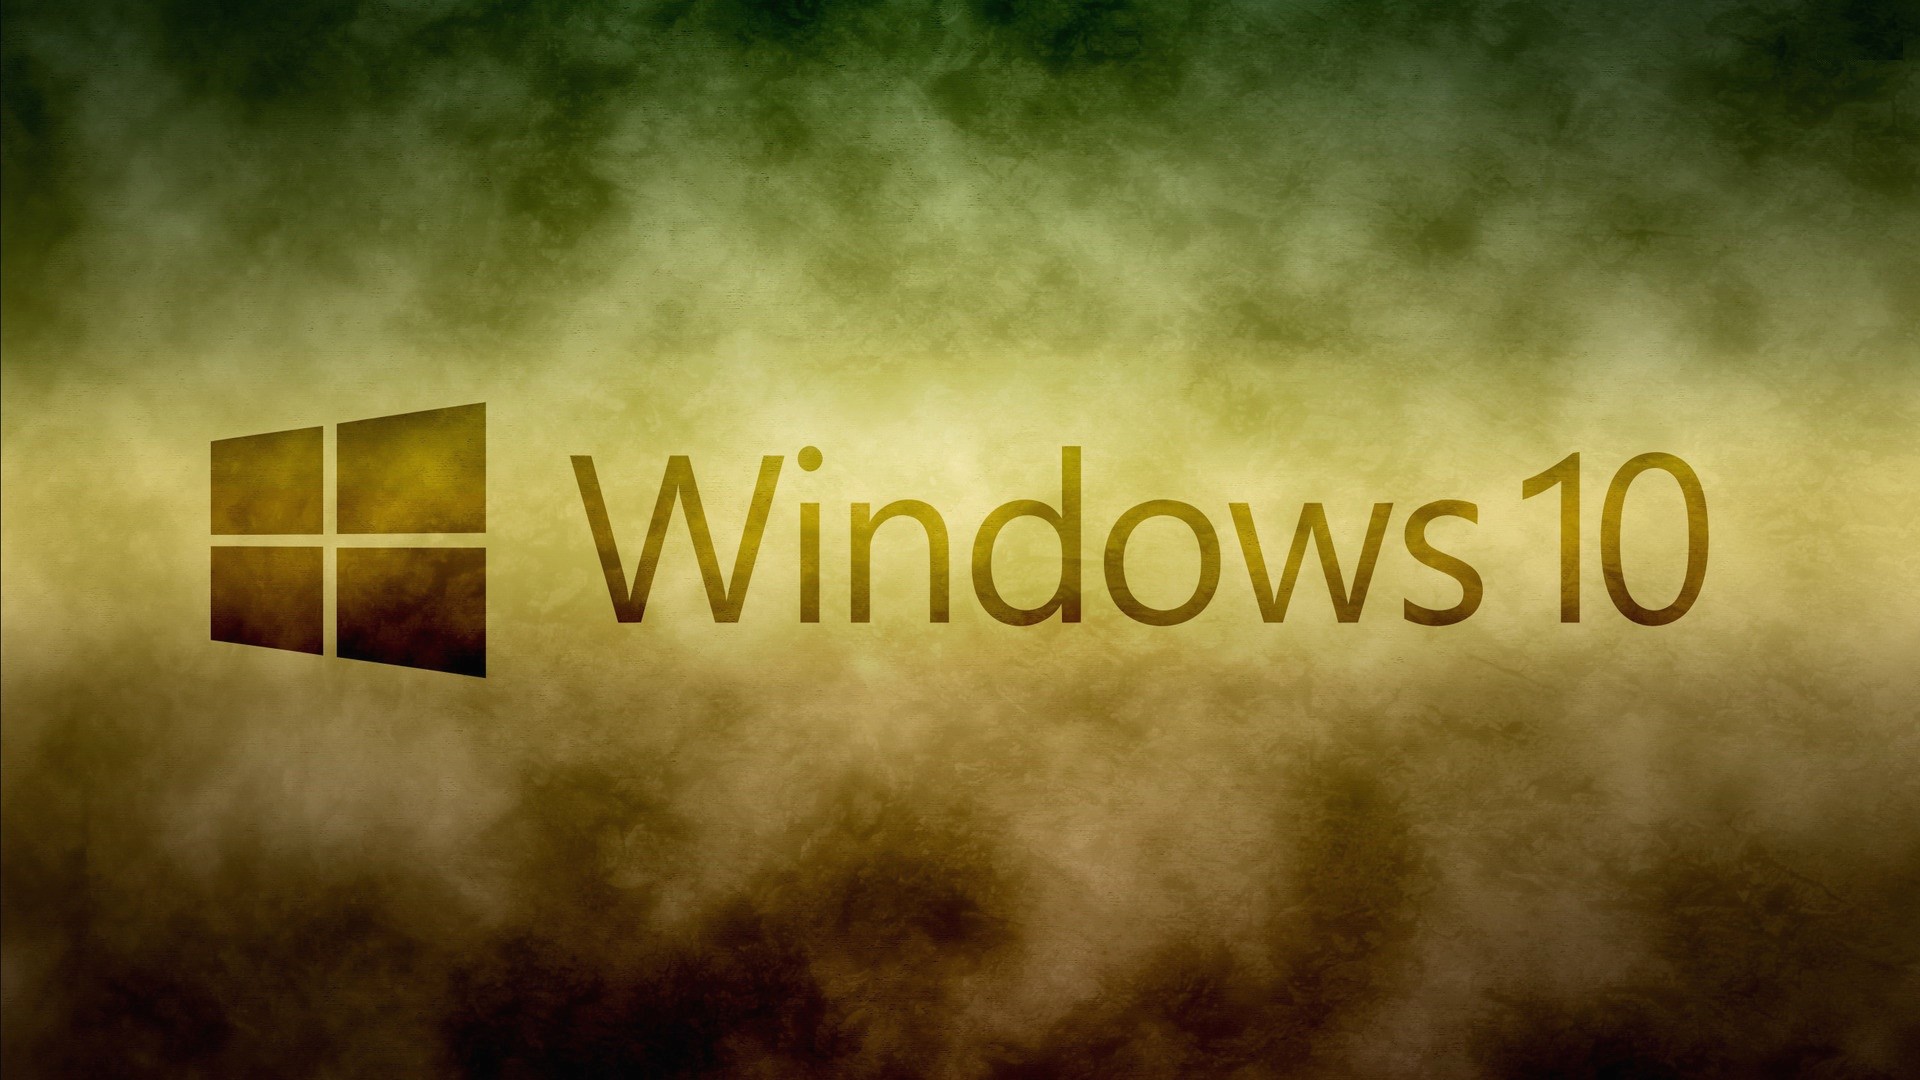 Stunning Windows Wallpaper HD Image Collection Laptop